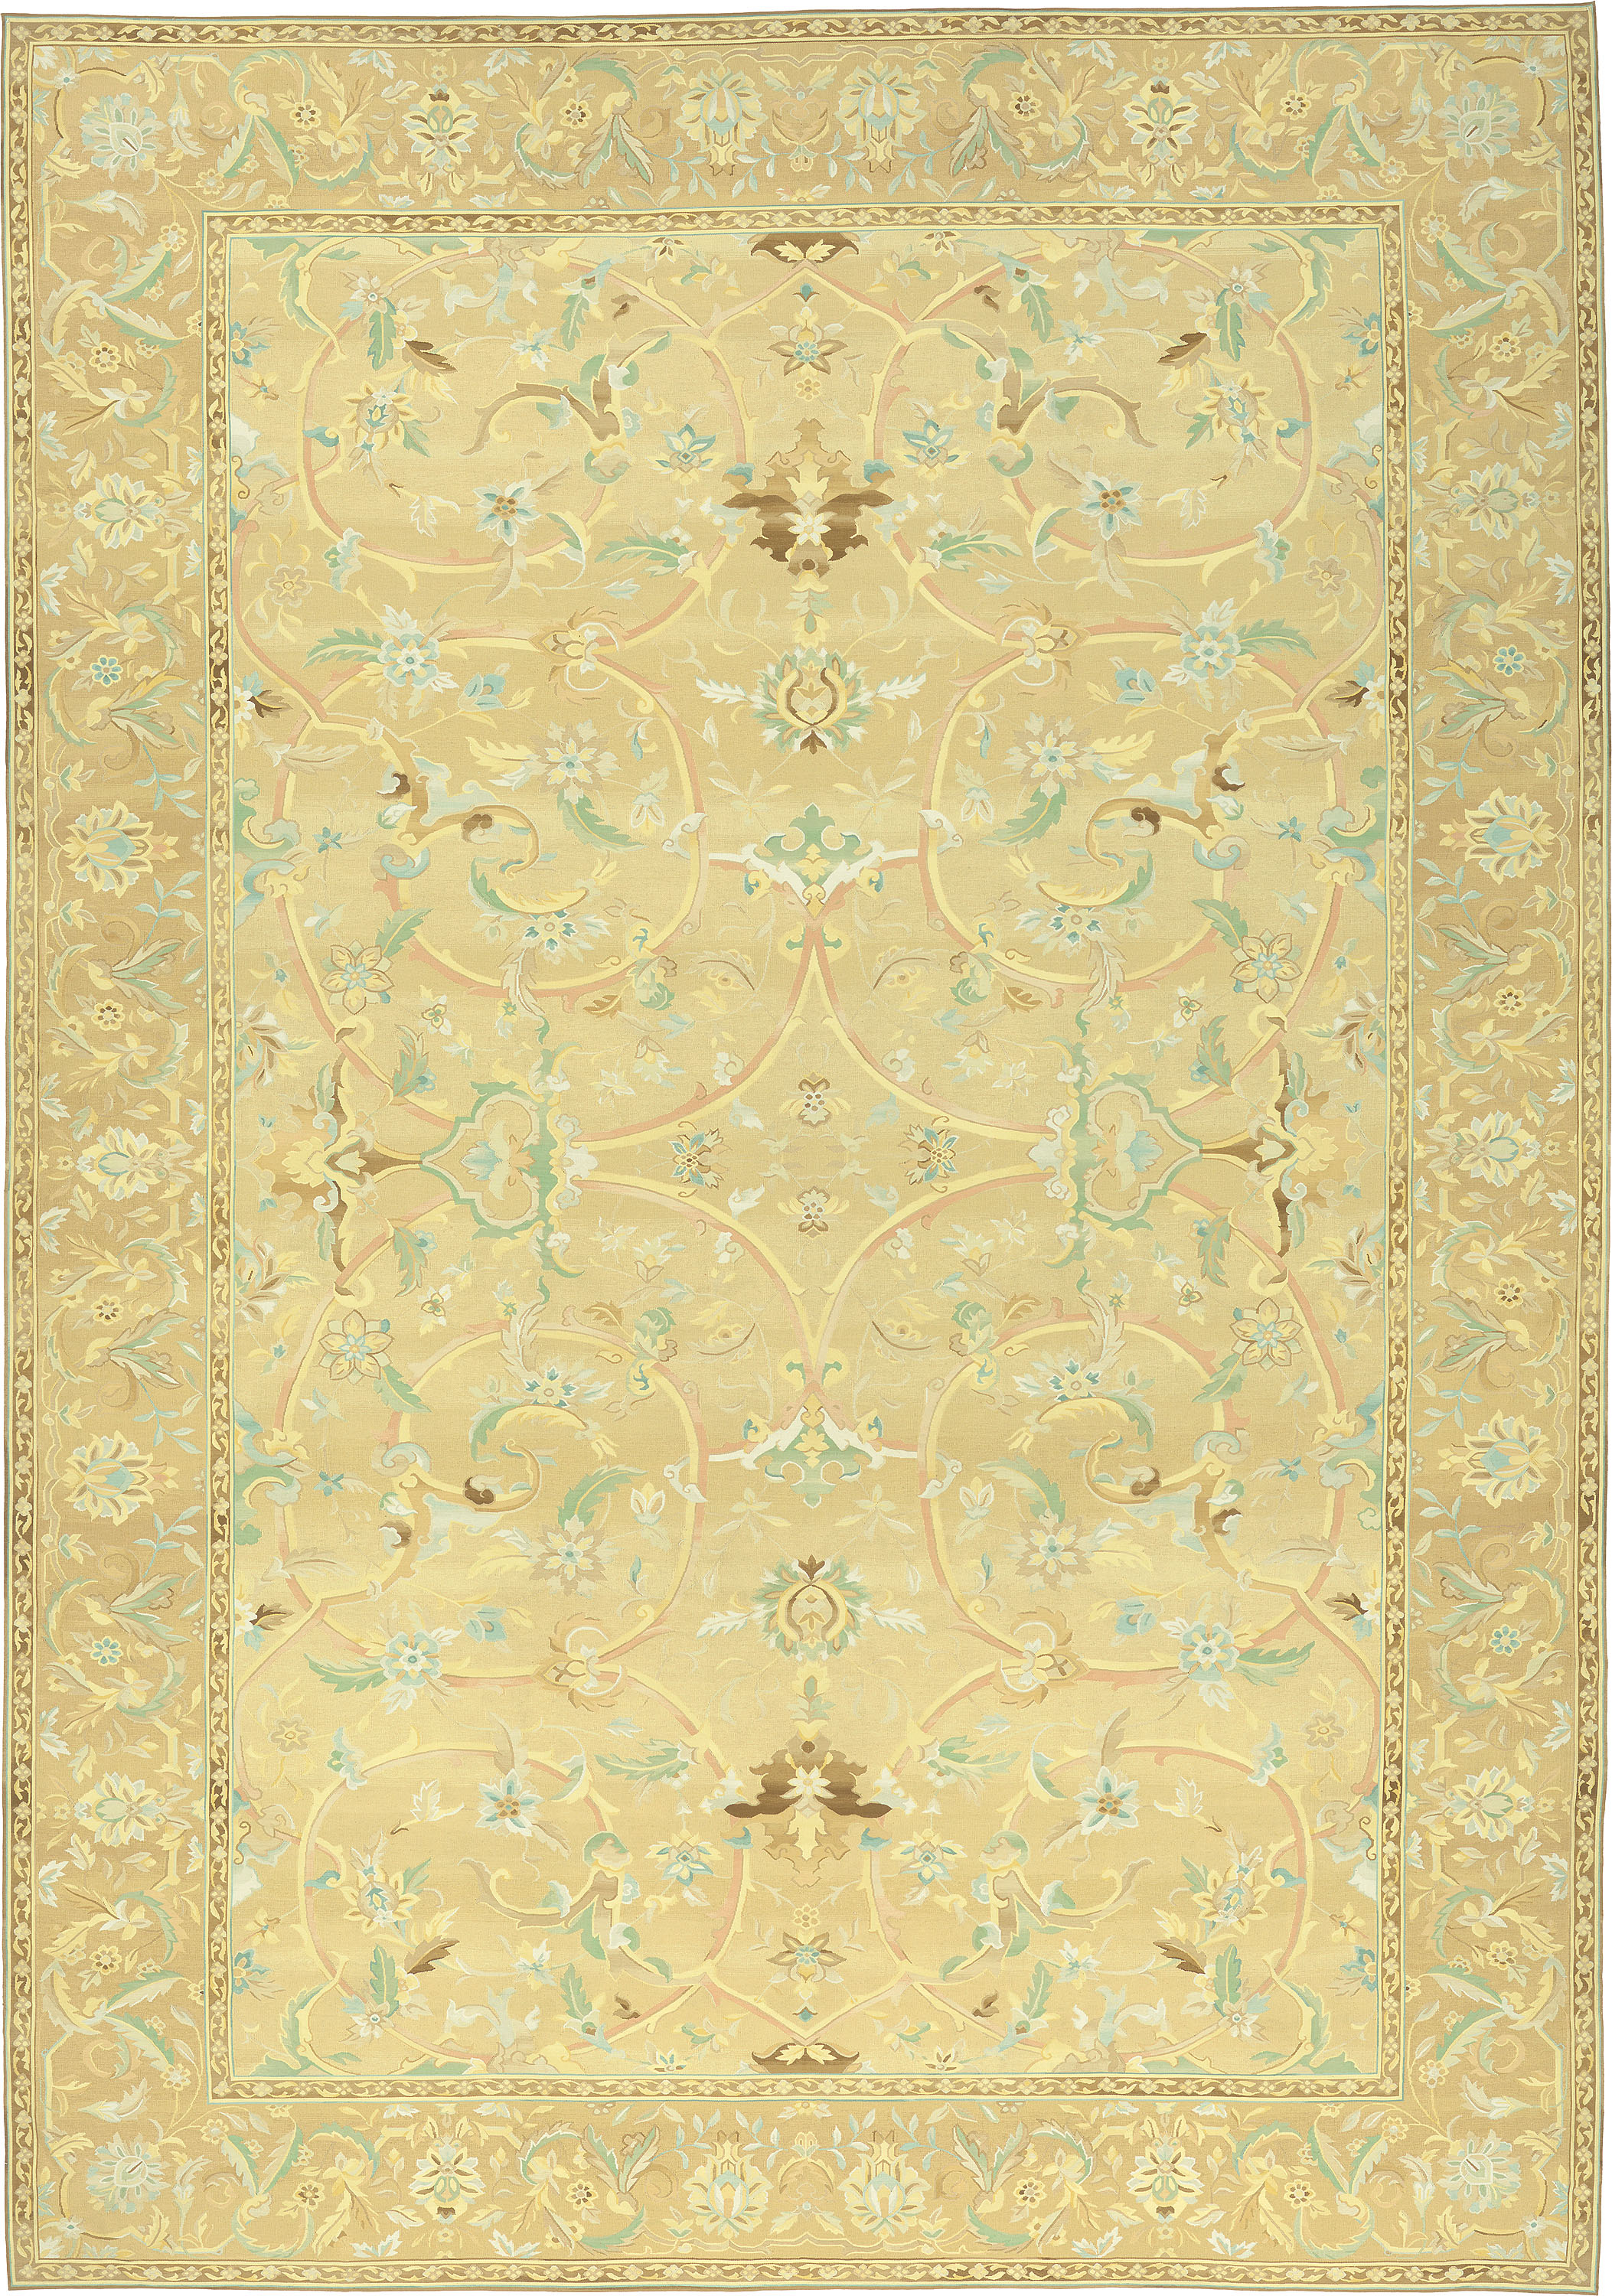 16771 Sassoon | Custom Traditional Design Carpet | FJ Hakimian | Carpet Gallery in NYC